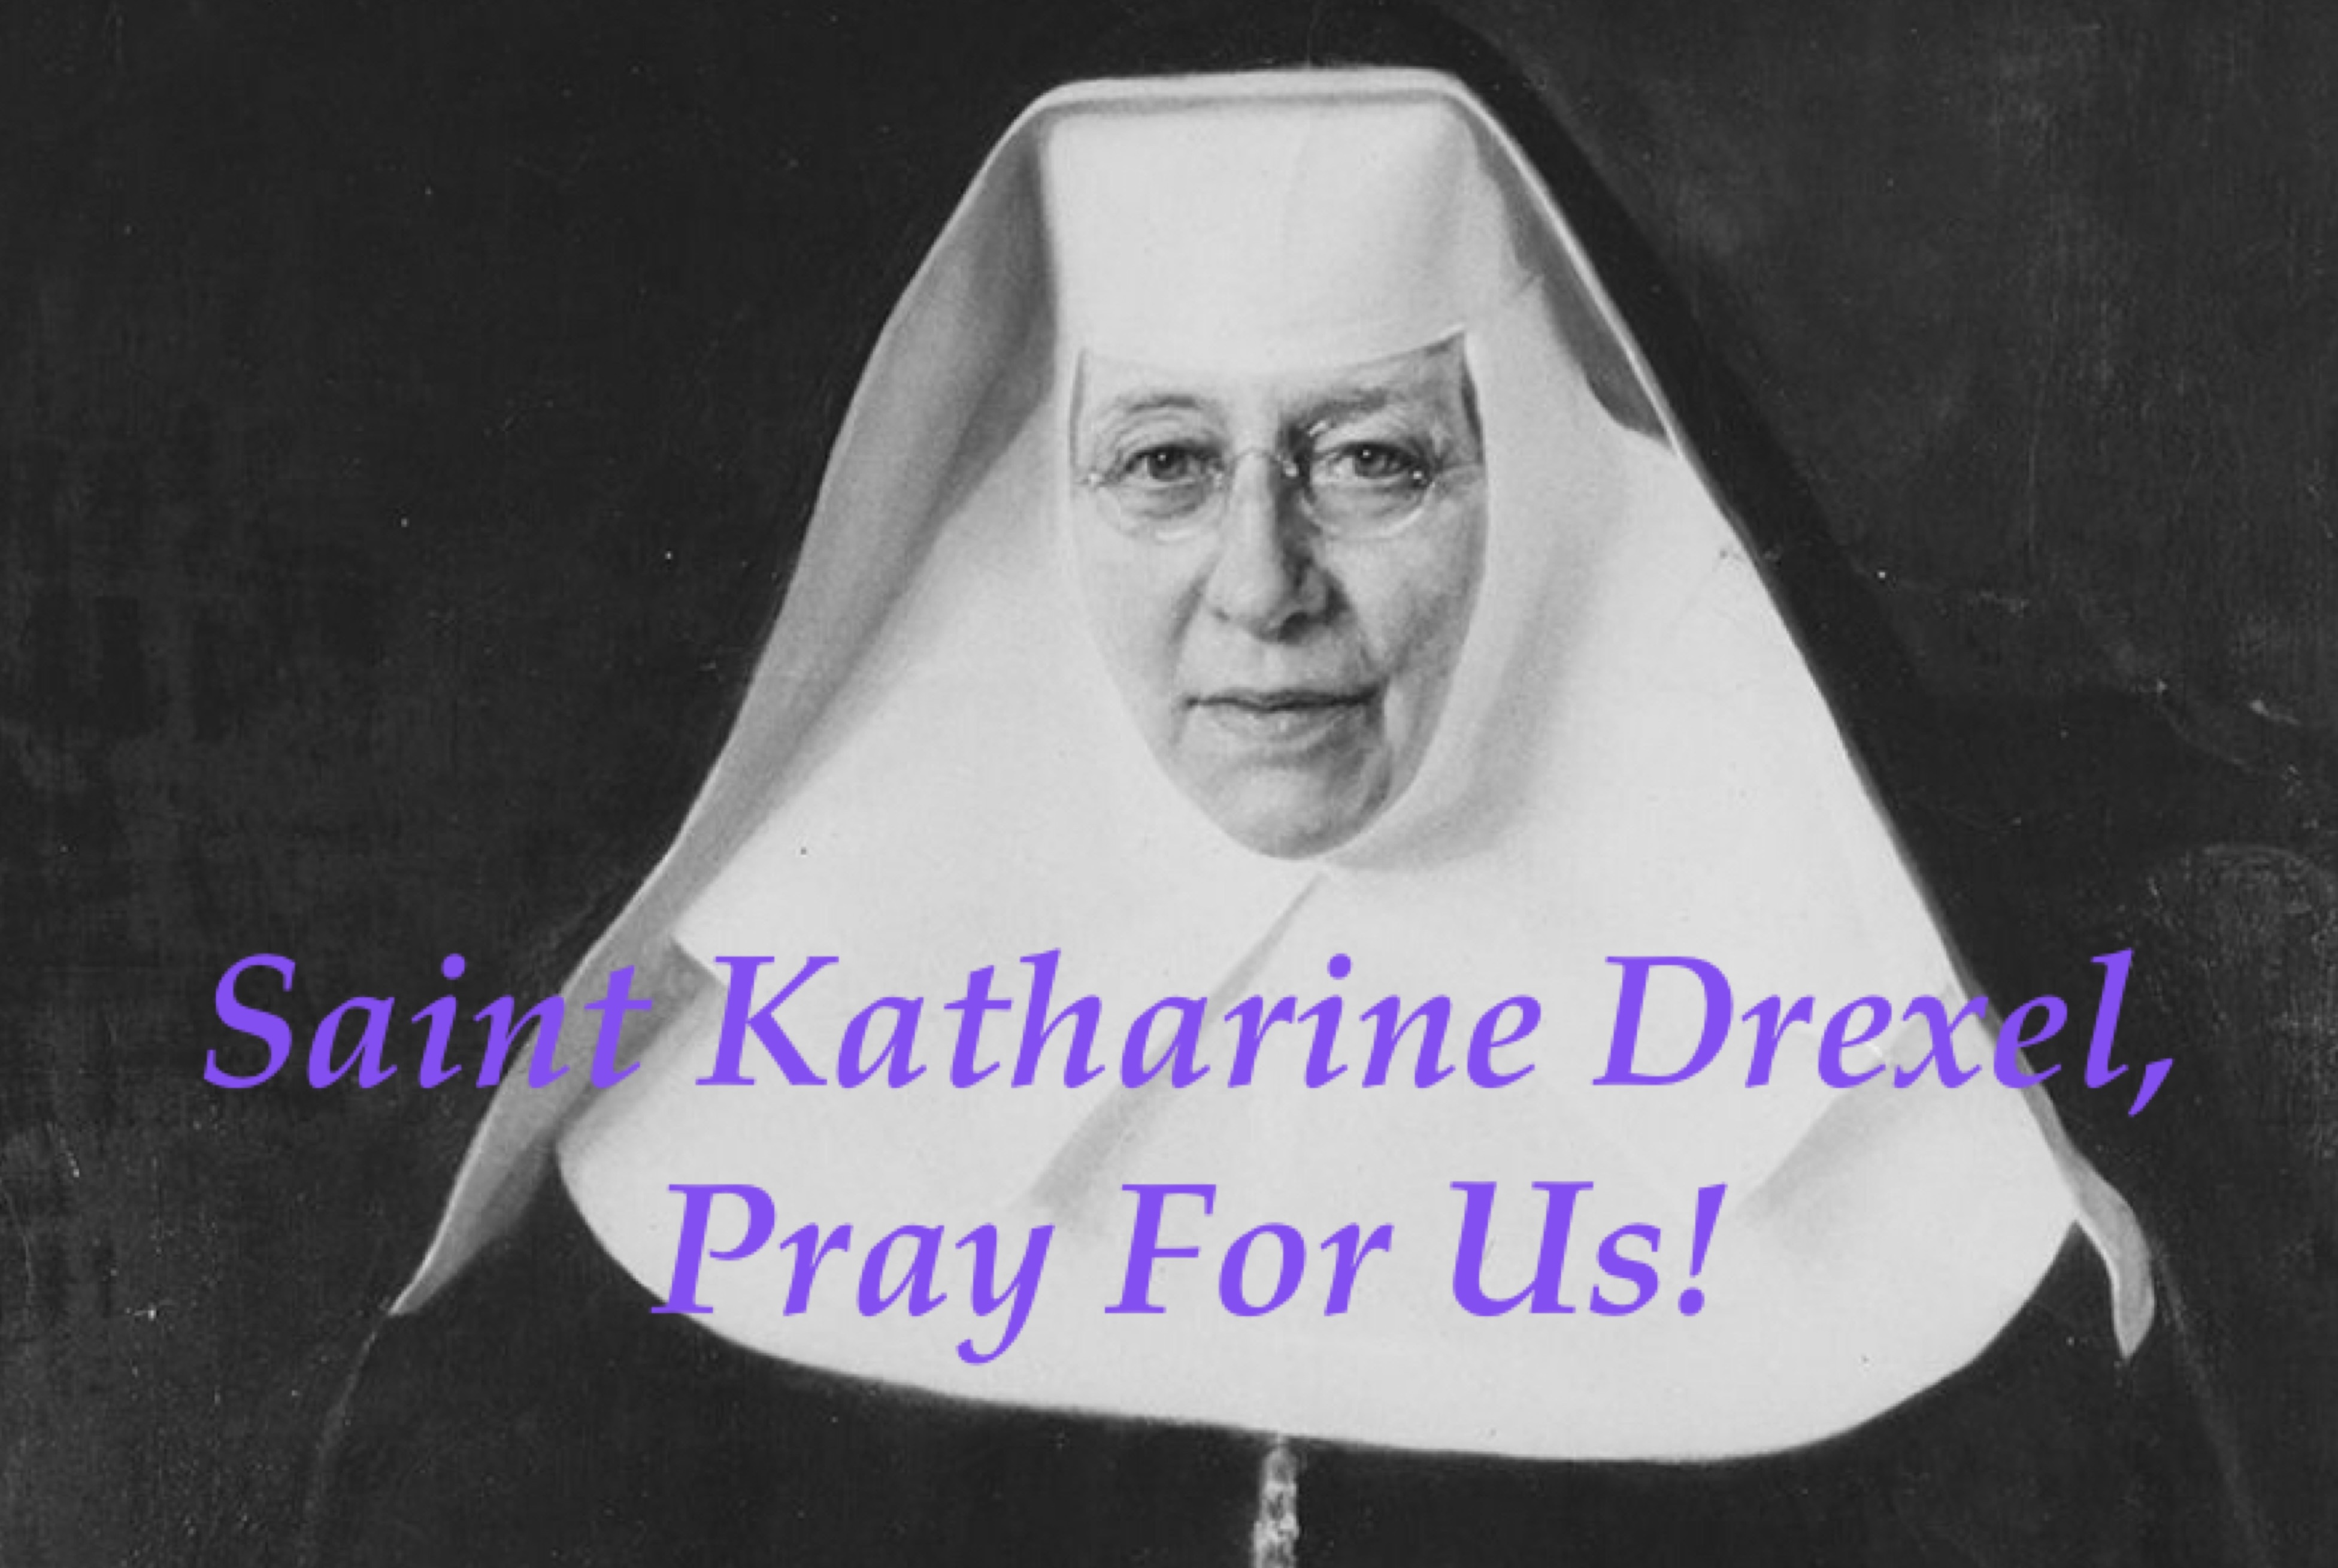 3rd March - Saint Katharine Drexel